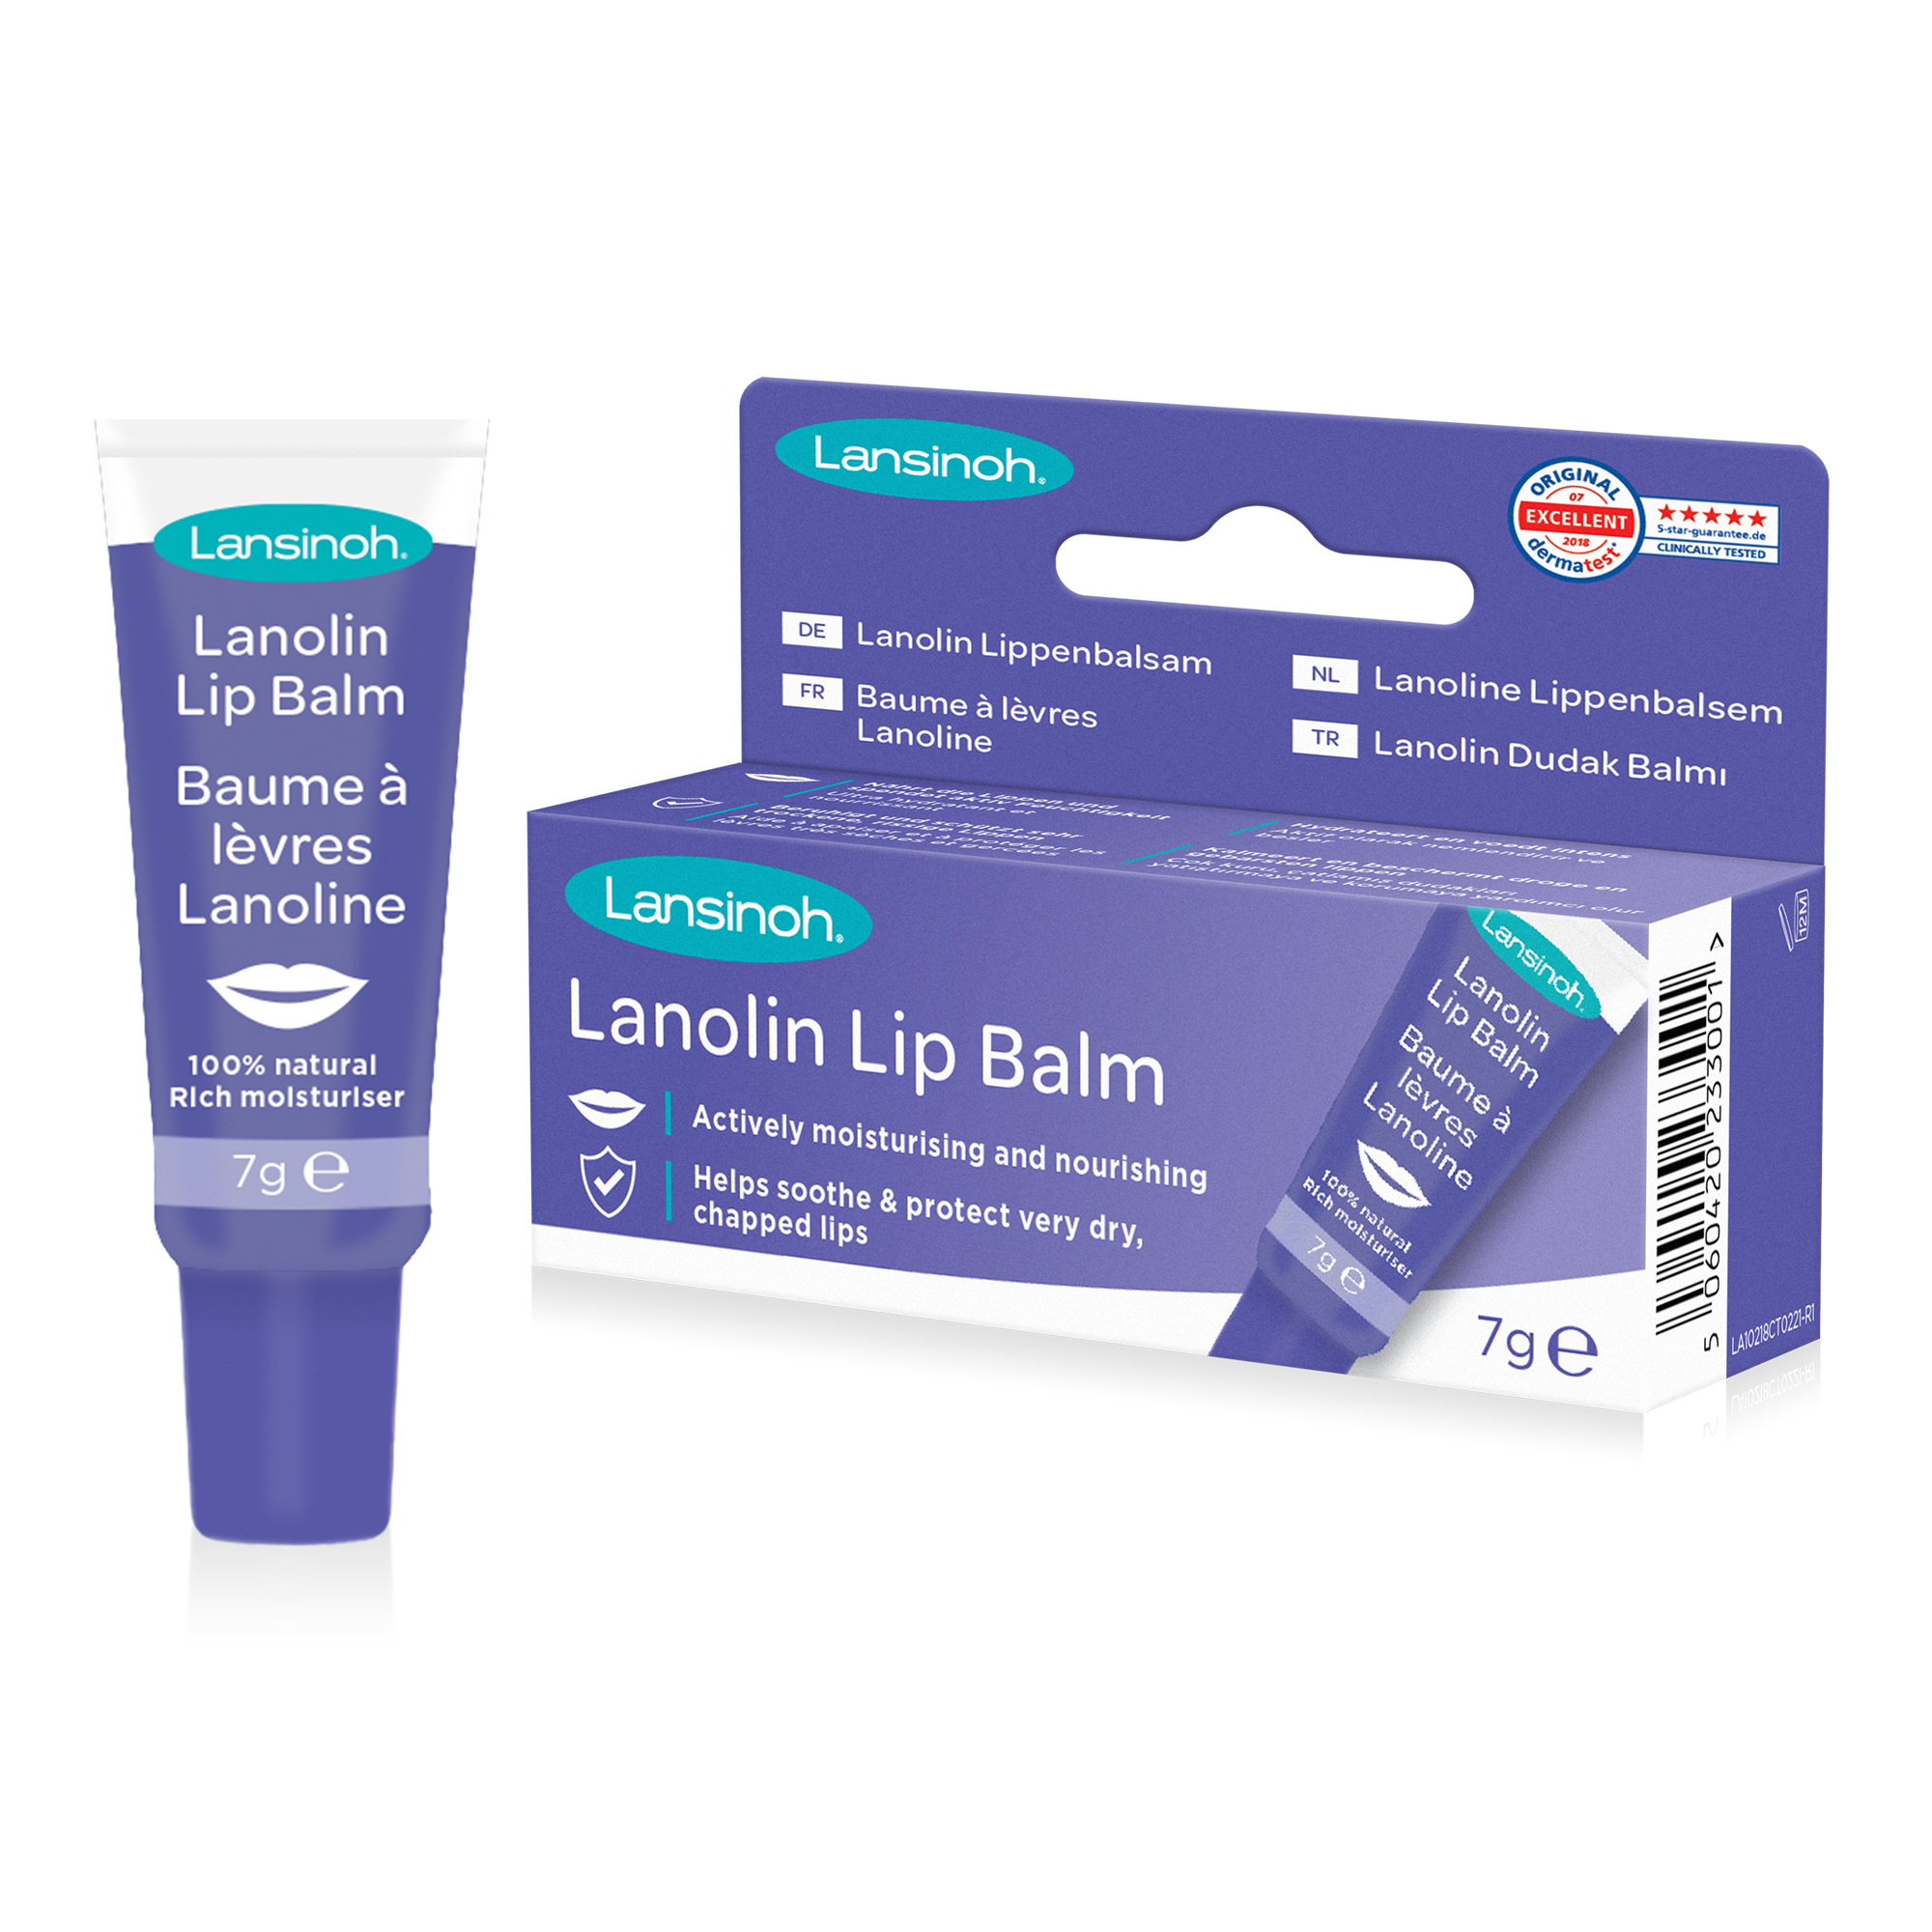 Lansinoh Lanolin Lip Balm 7g (PG-10218)